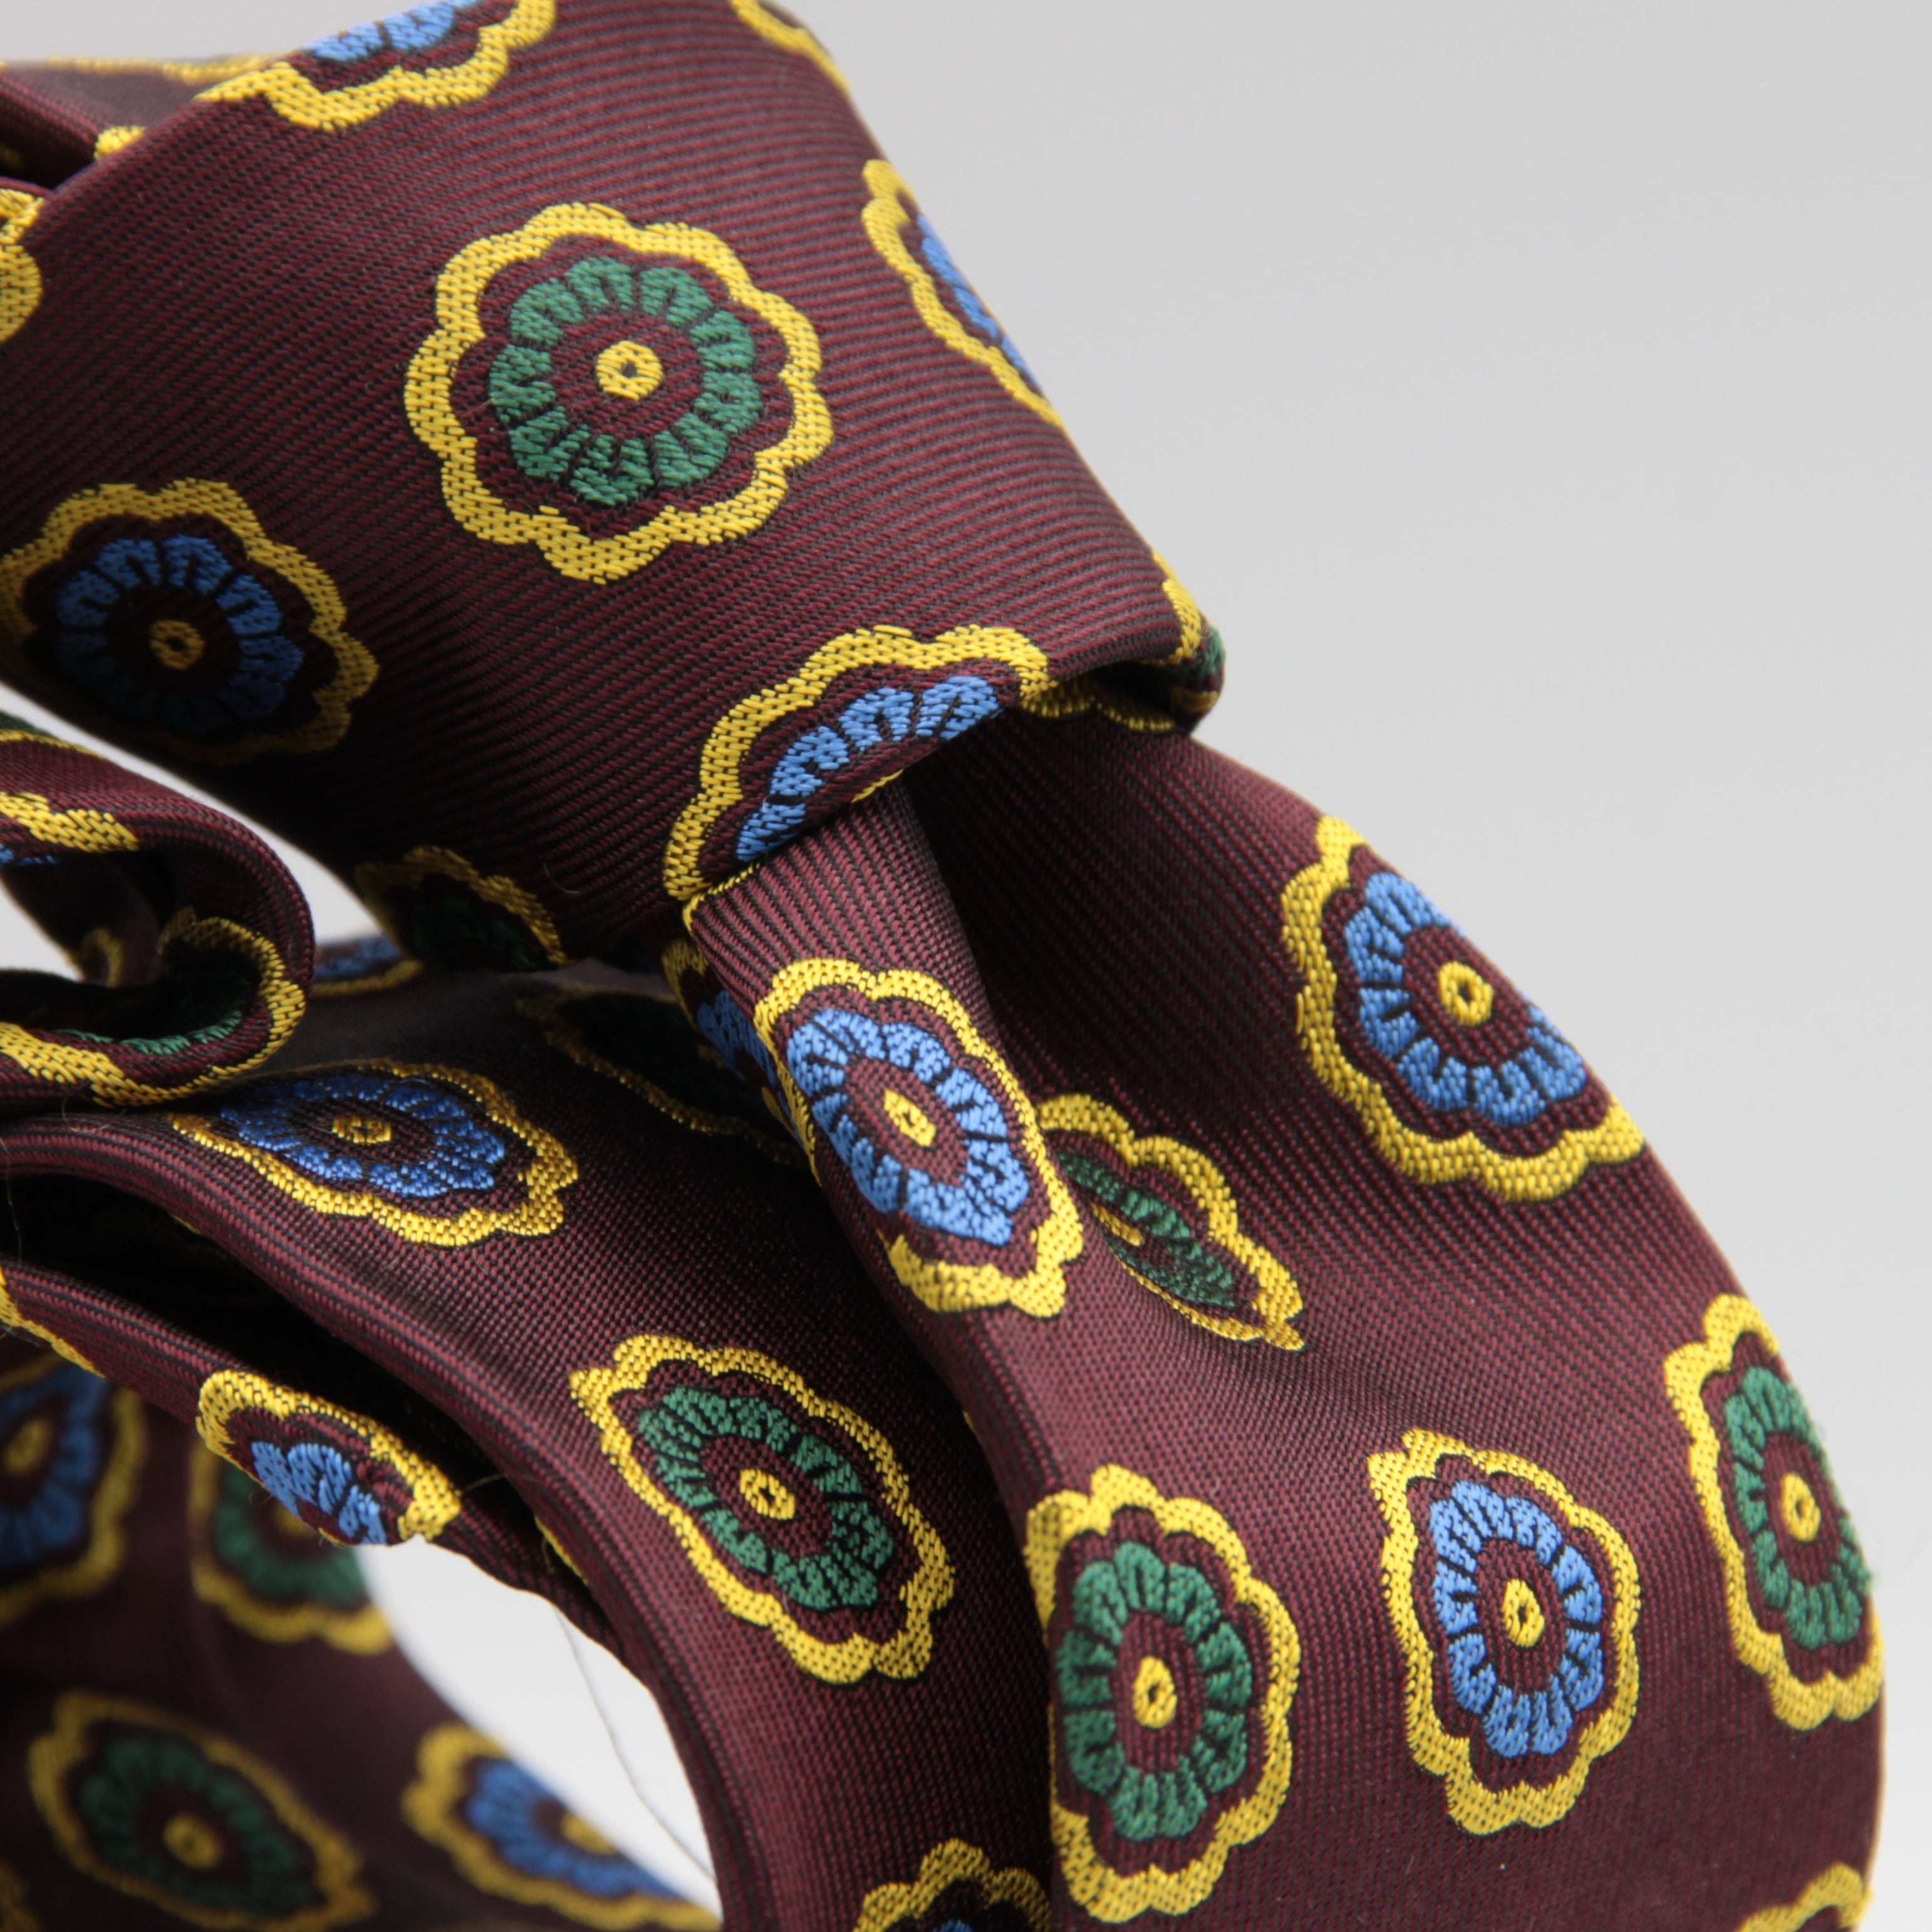 Cruciani & Bella 100% Woven Jacquard Silk Unlined Wine, Blue, Green and Yellow motif tie Handmade in England 8 x 153 cm #6267